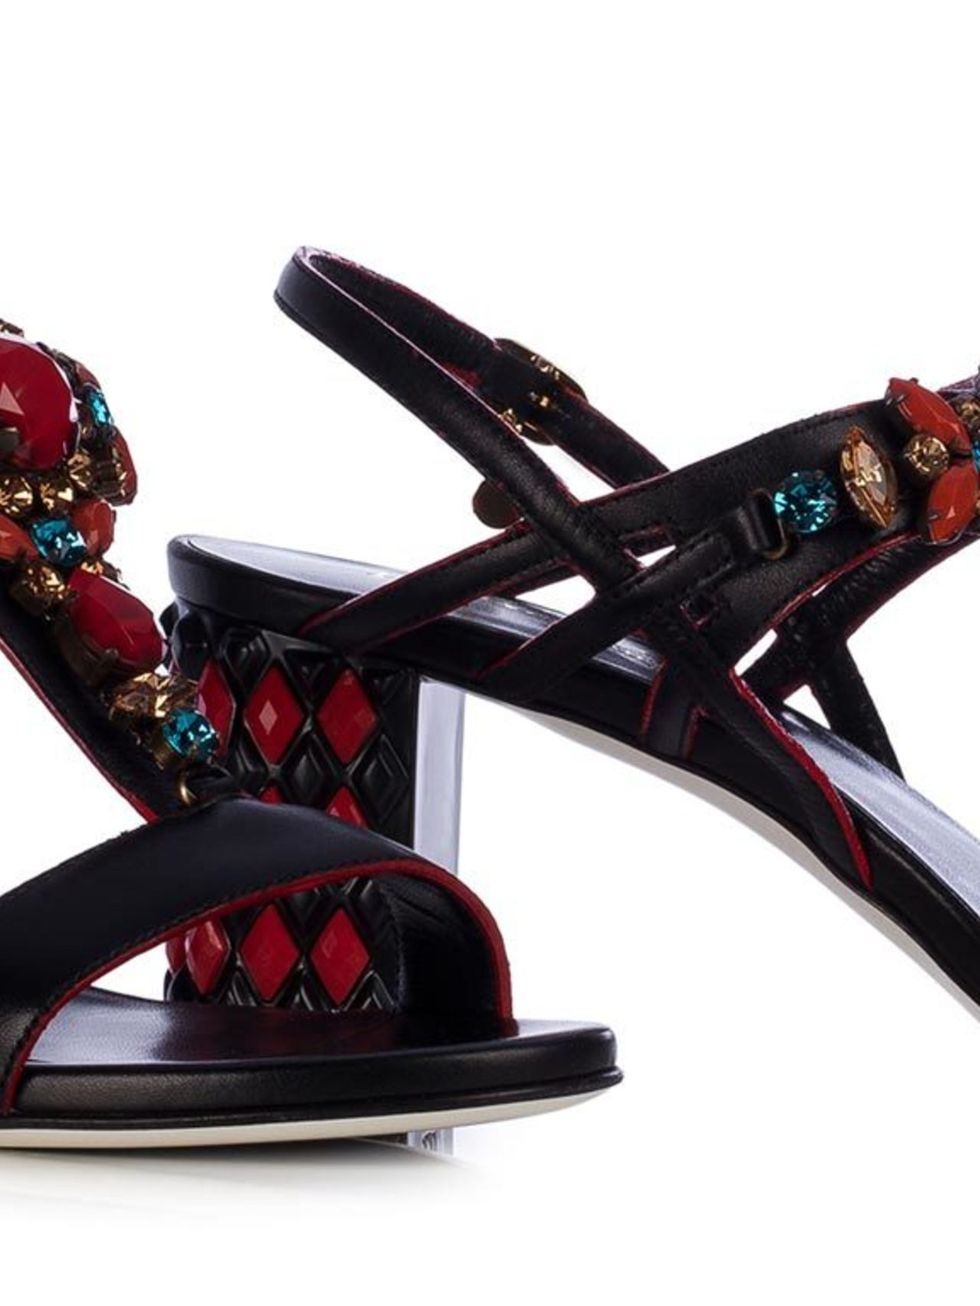 Sandal, Red, High heels, Basic pump, Carmine, Fashion, Maroon, Purple, Black, Material property, 